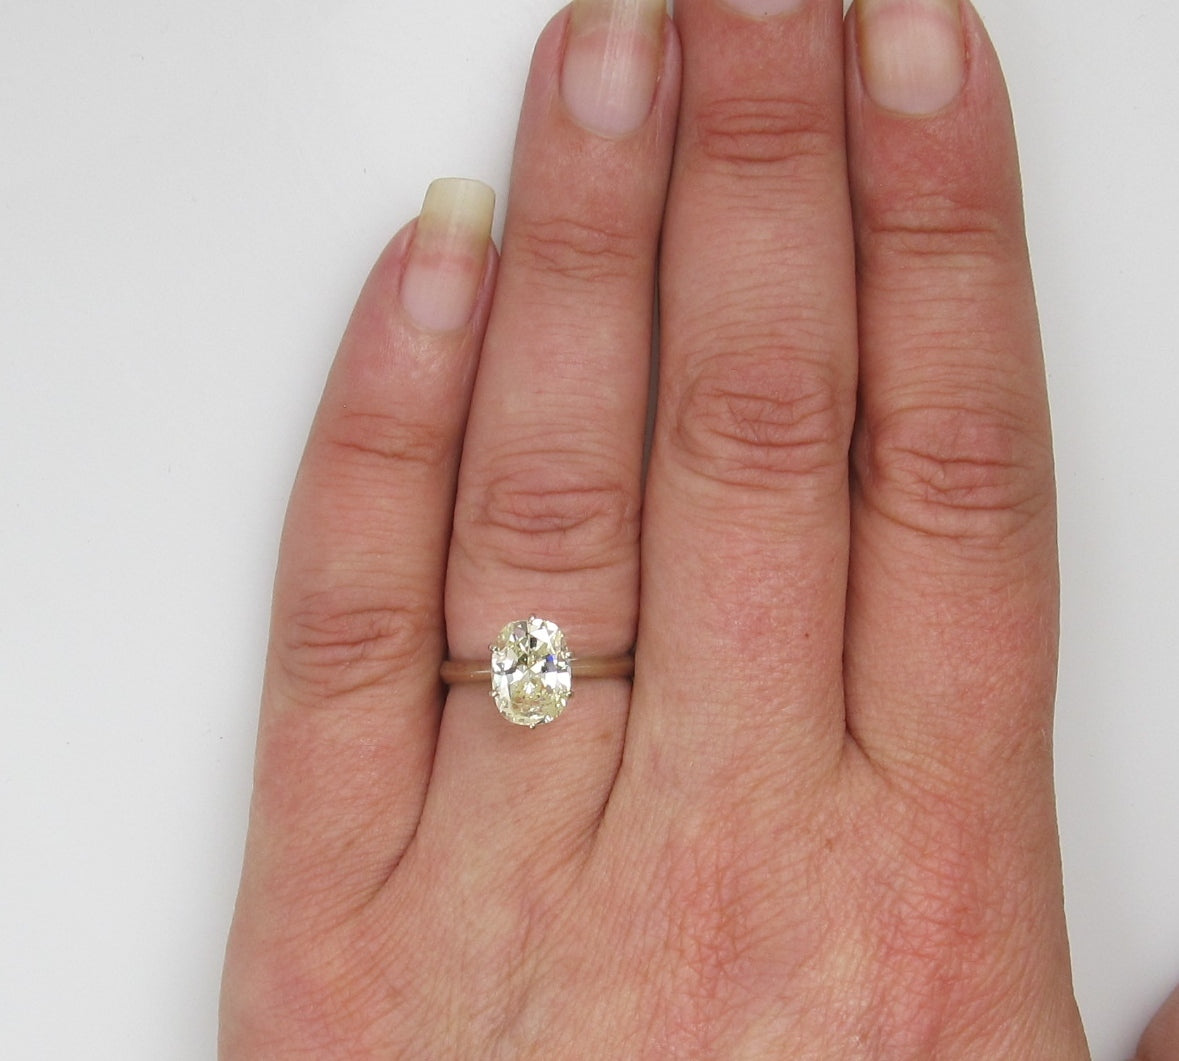 1.86ct oval cut diamond in 14k white gold